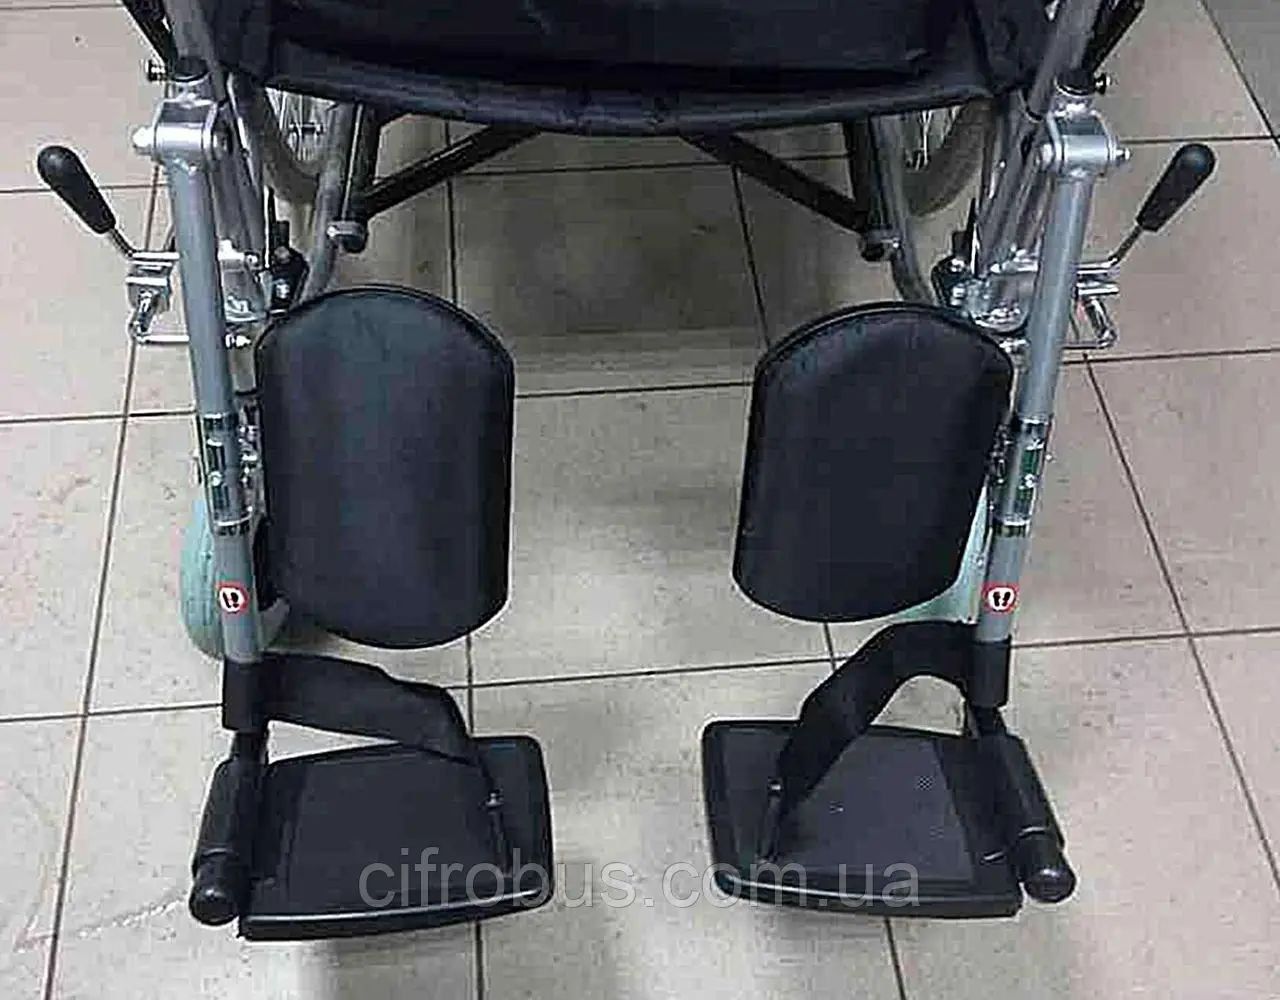 Кресло-коляска для инвалидов Vitea Care VCWK7 Wheelchair